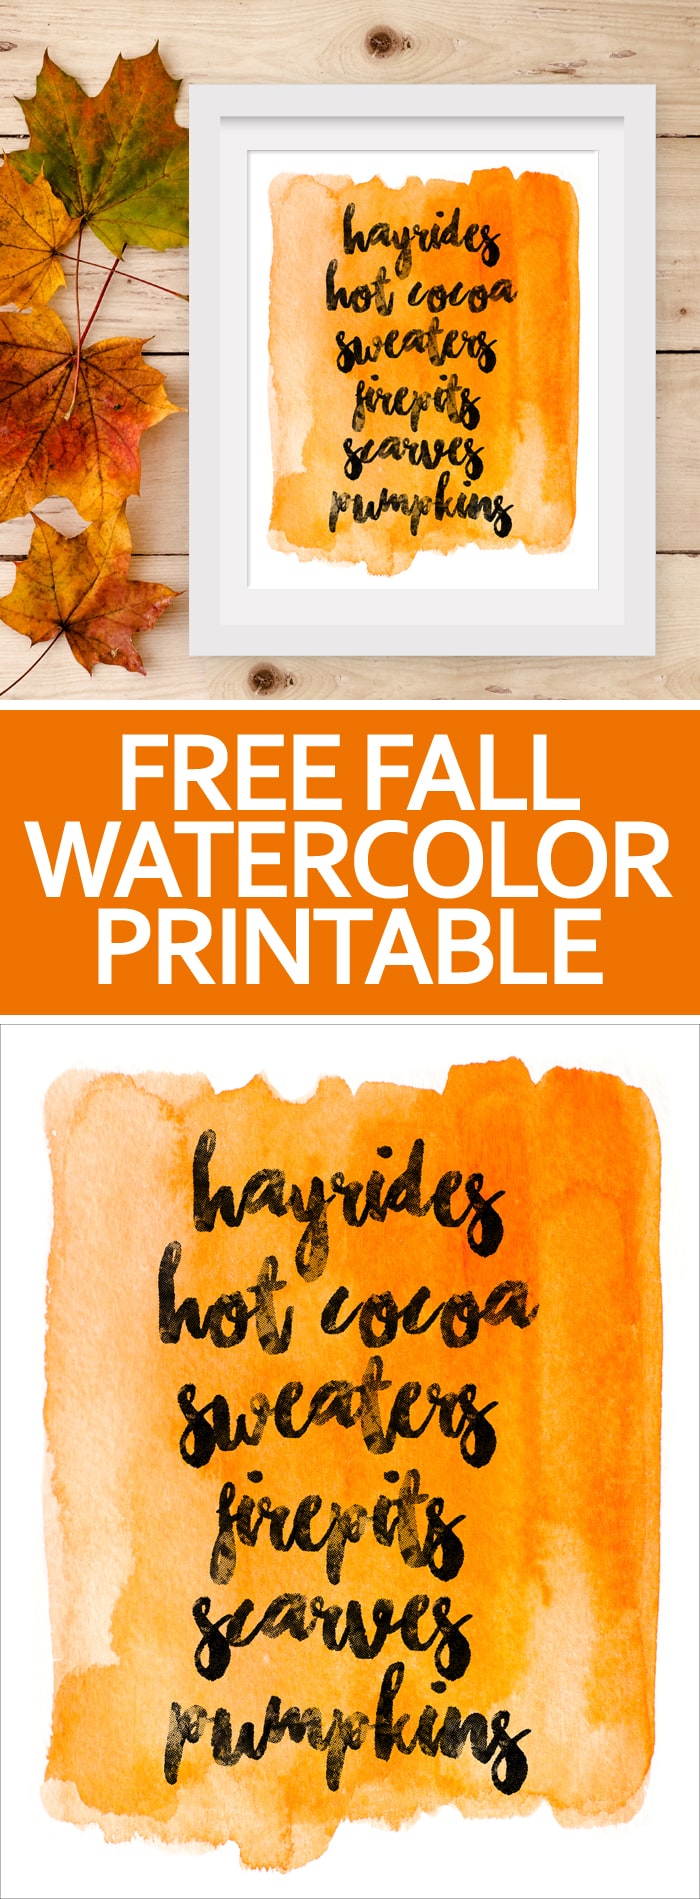 Free Fall Watercolor Printable poster.